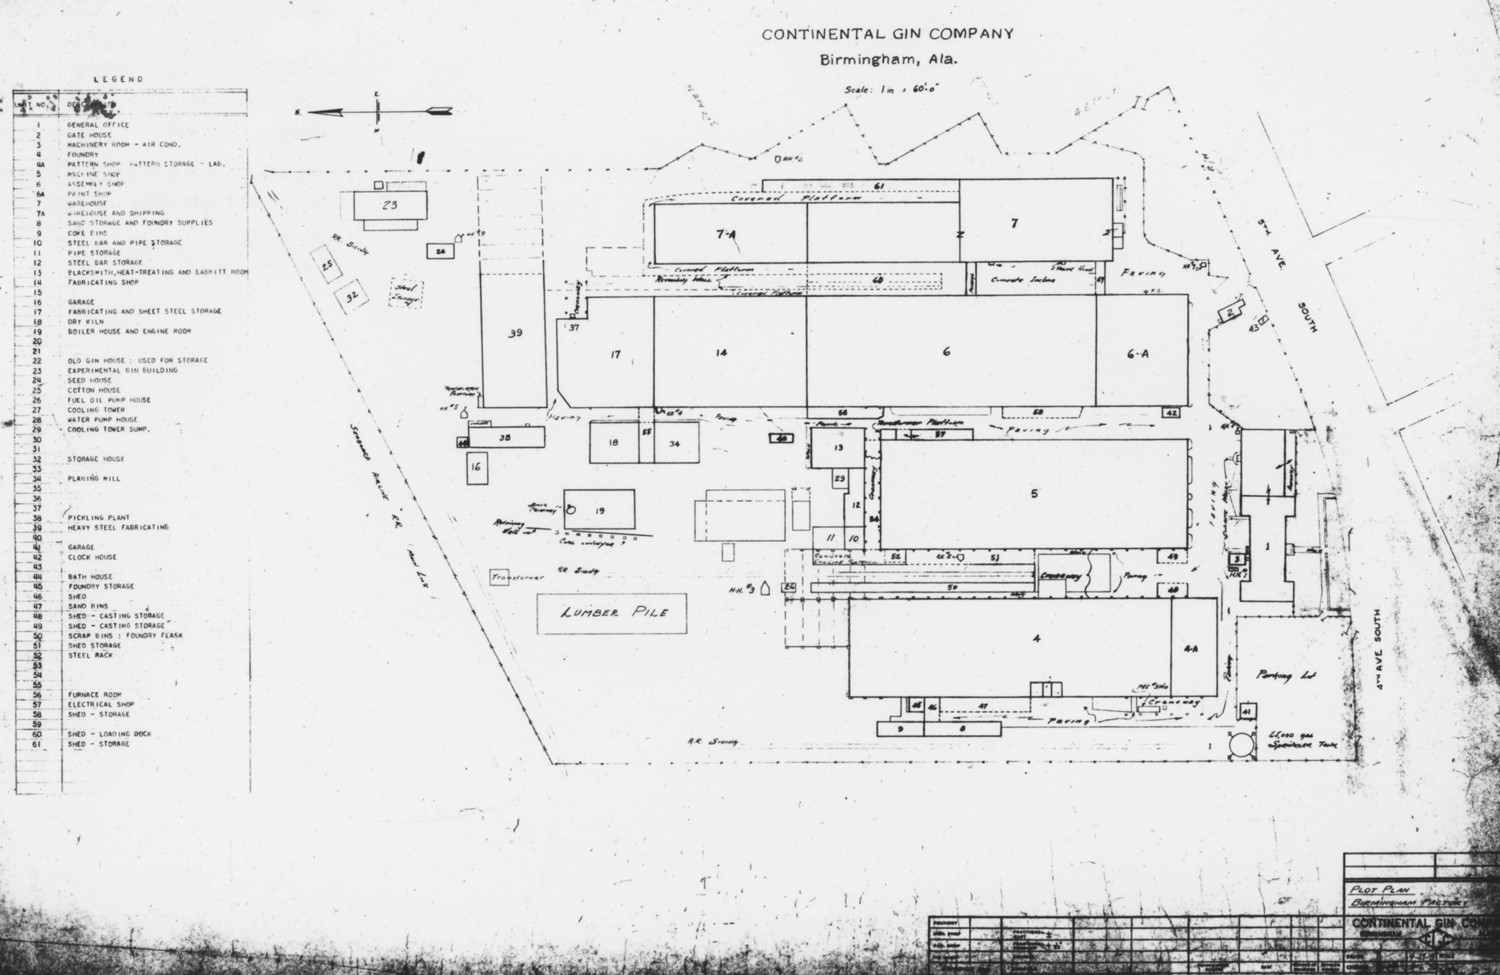 Continental Gin Company, Birmingham Alabama Early Site Plan